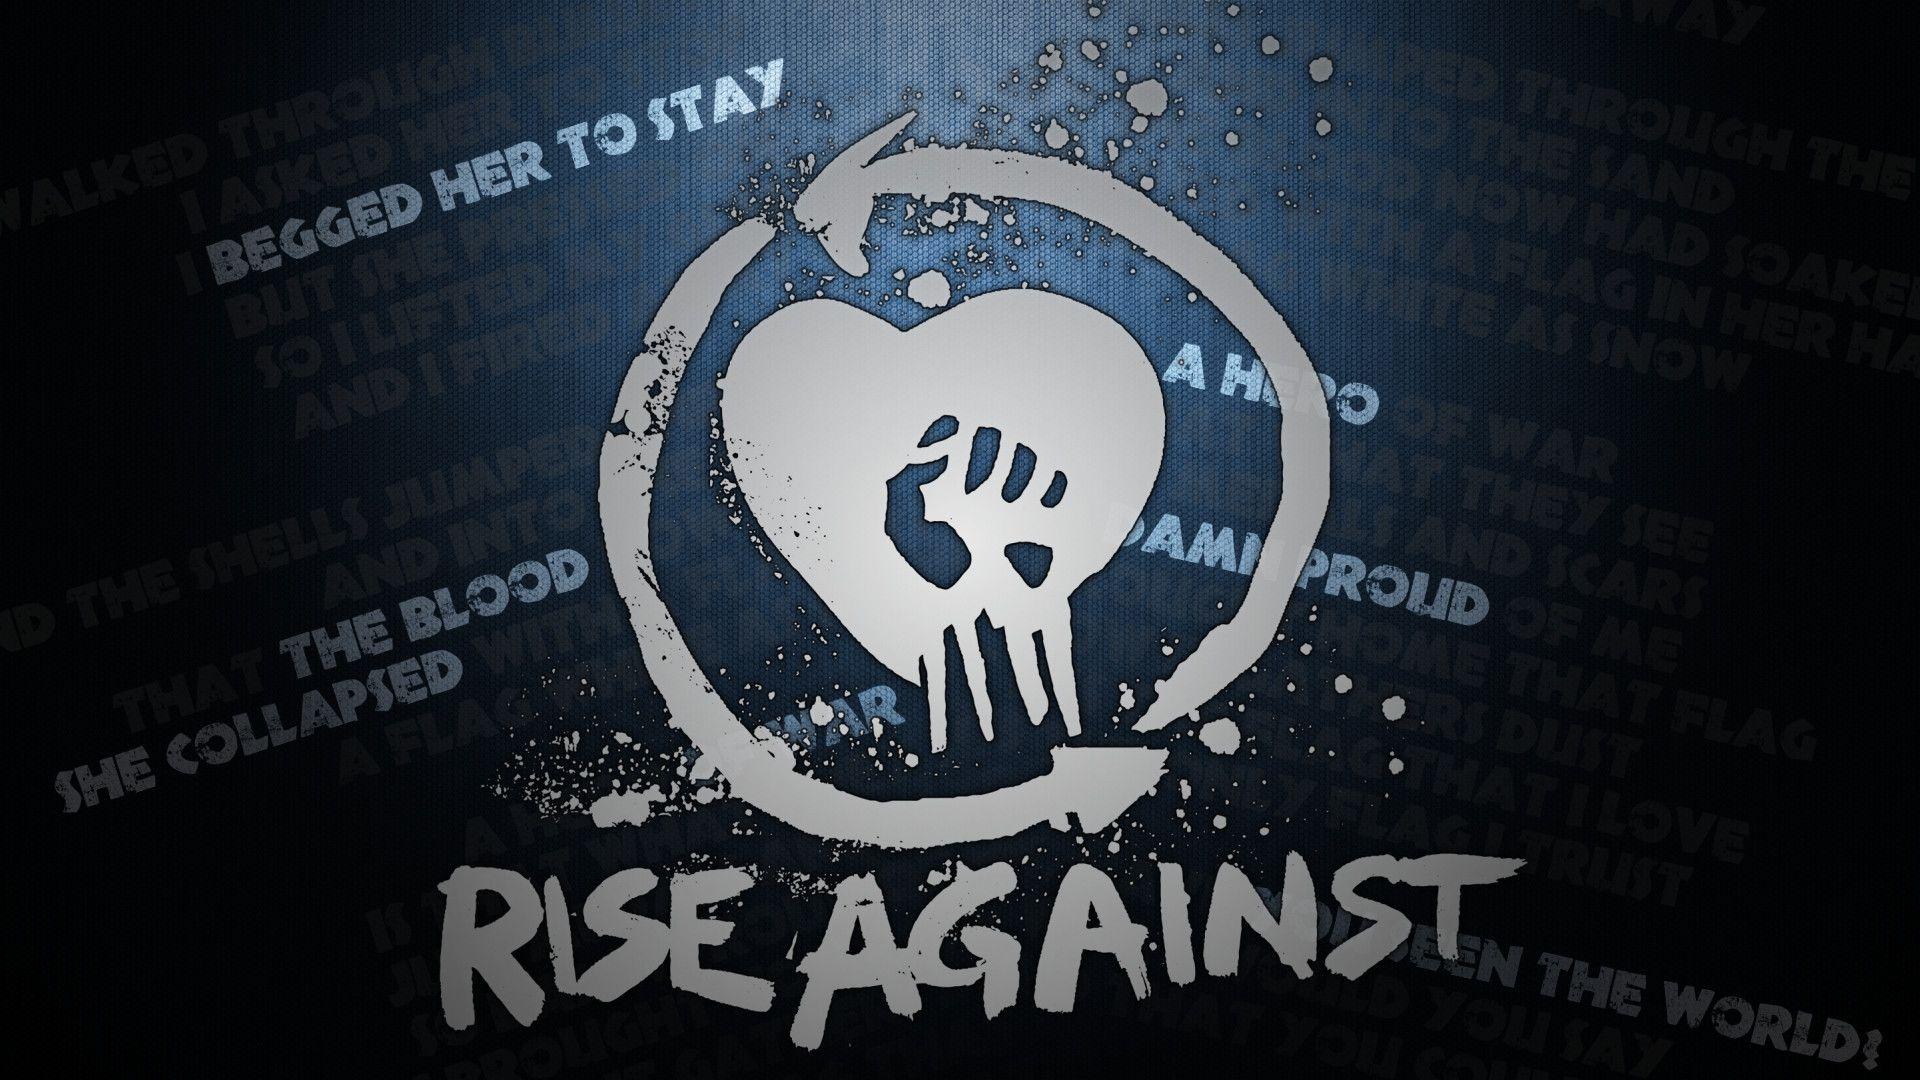 rise against lyrics wallpaper